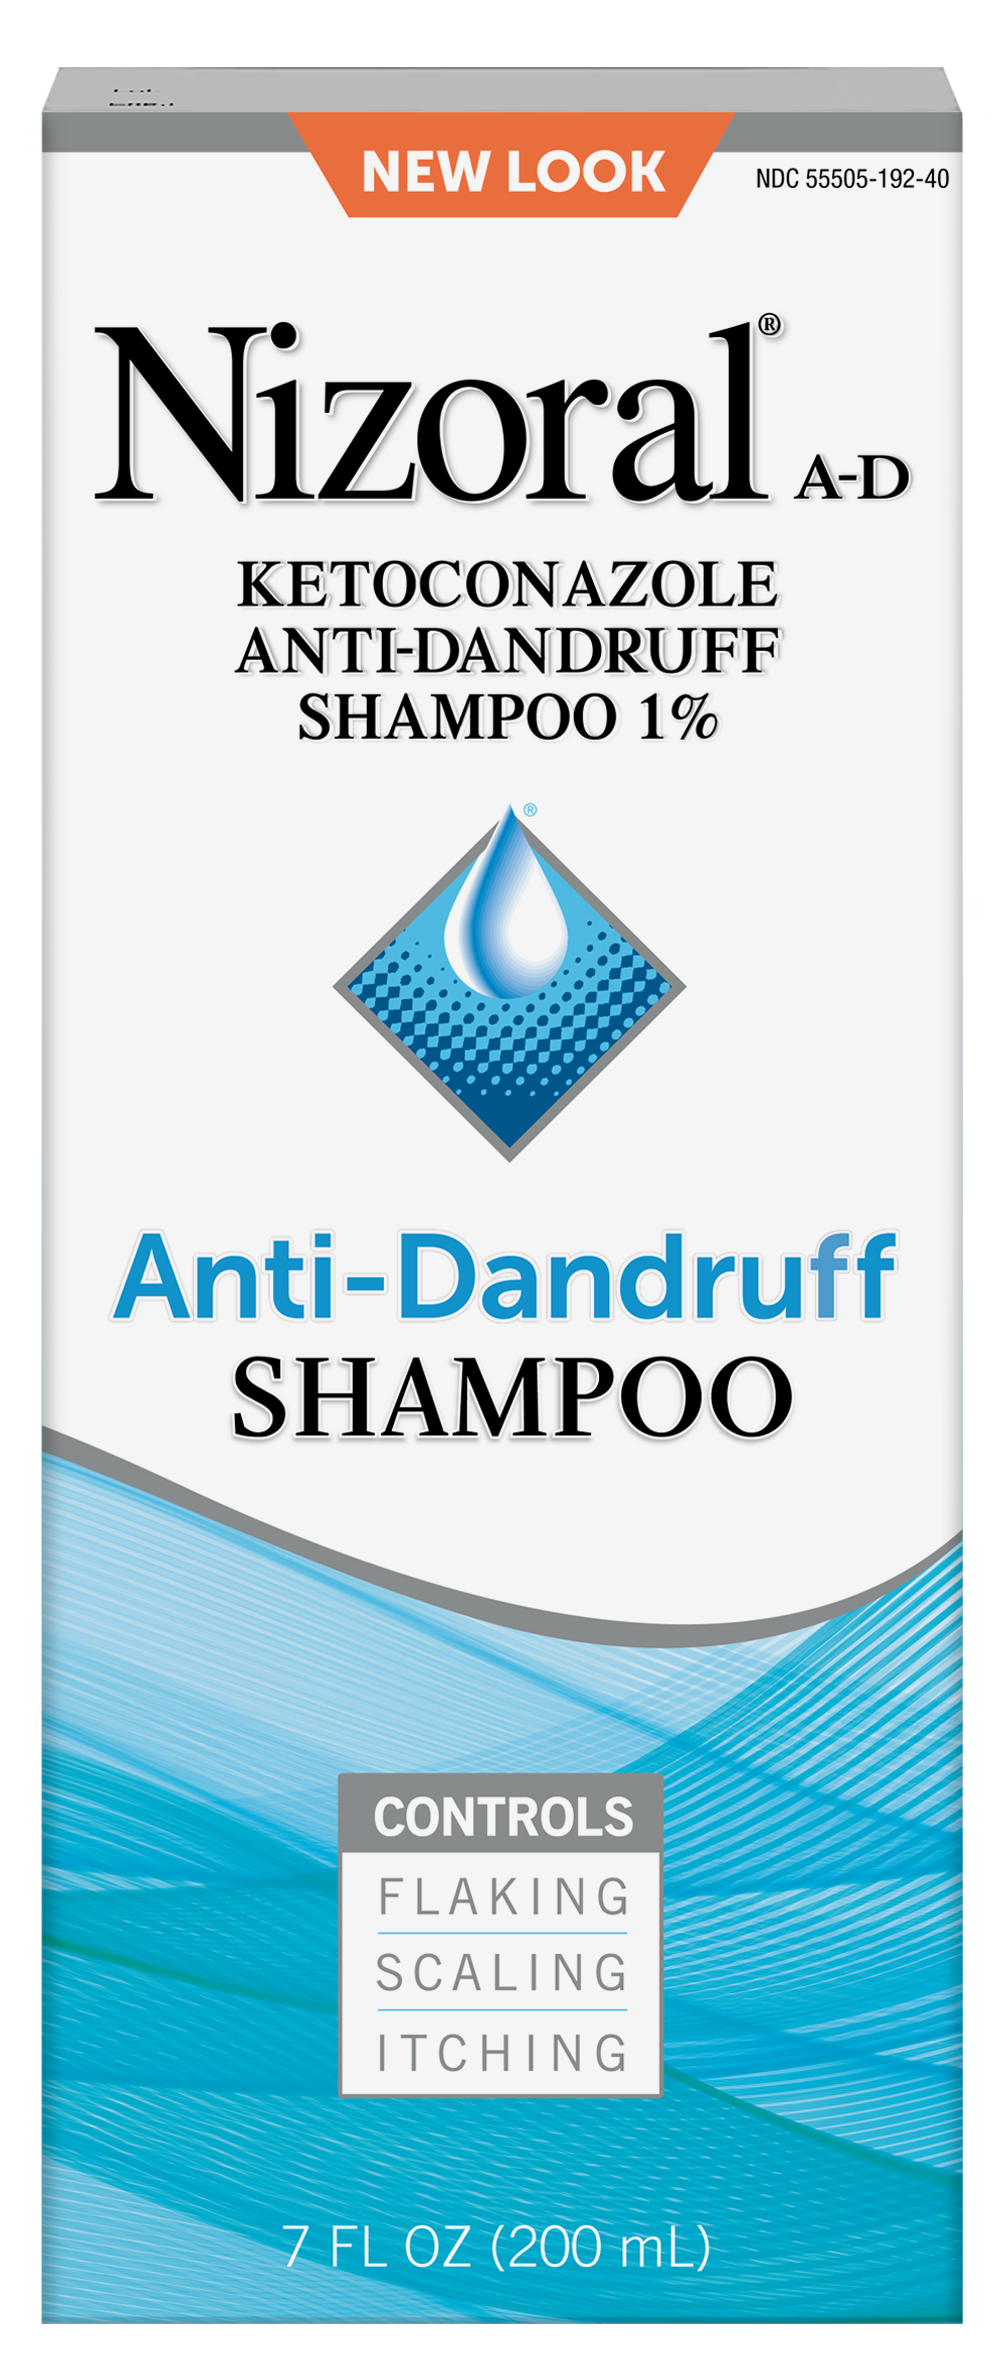 Nizoral A-D Anti-Dandruff Shampoo, 7 fl oz - image 1 of 8